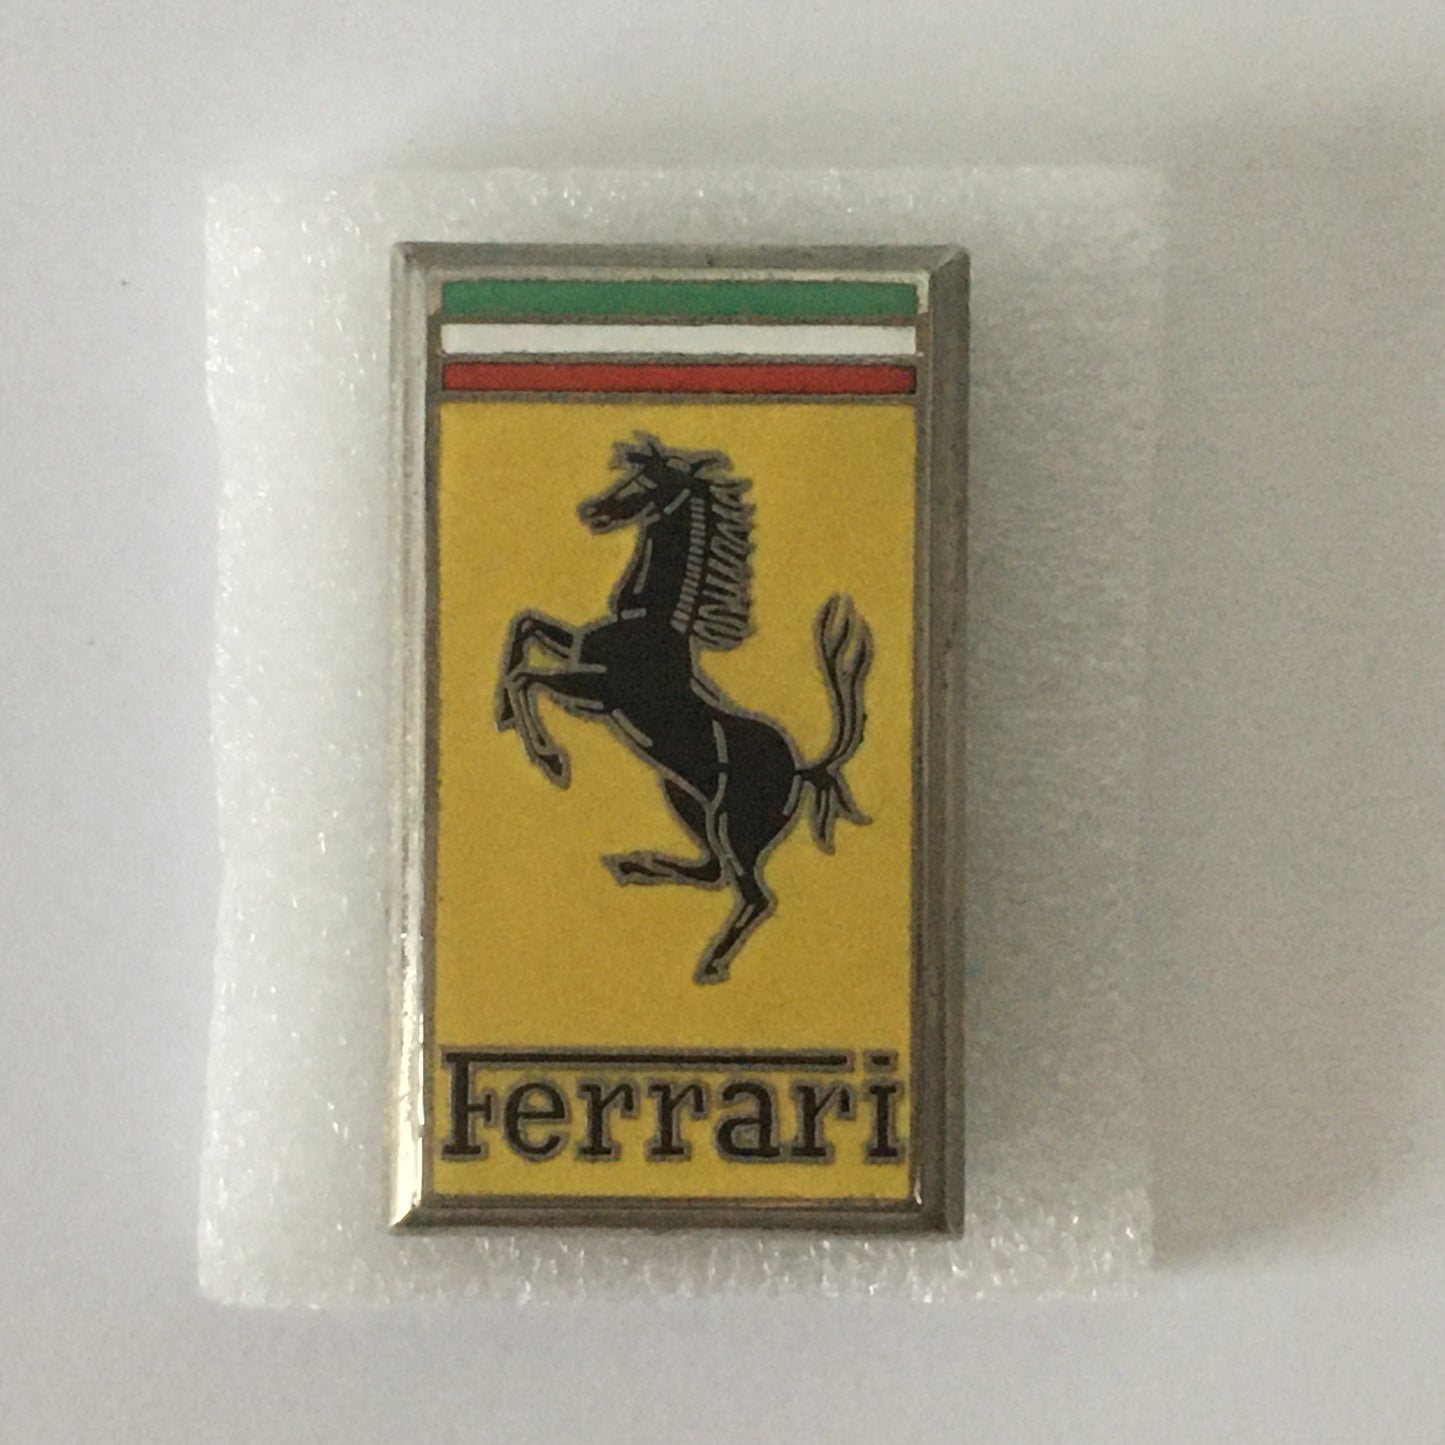 Ferrari, Original Ferrari Emblem in Metal with Enamel Finish and Screw Fixing, Excellent Condition